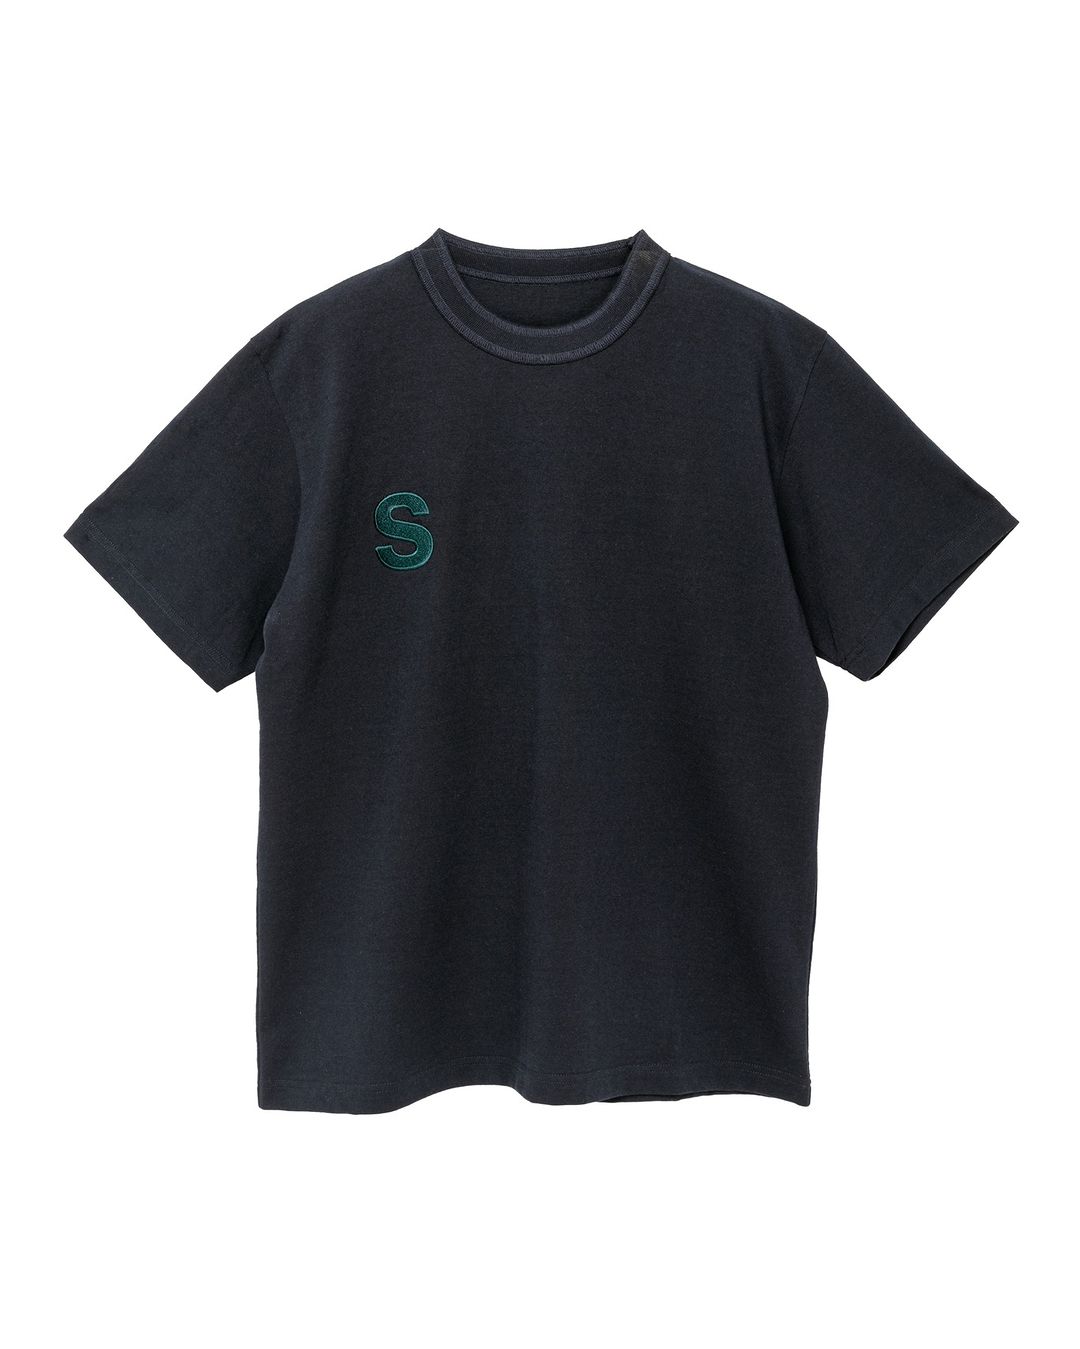 sacai Aoyama Exclusive T-Shirtにてリニューアルオープン記念限定TEEが4/22 発売 (サカイ青山)